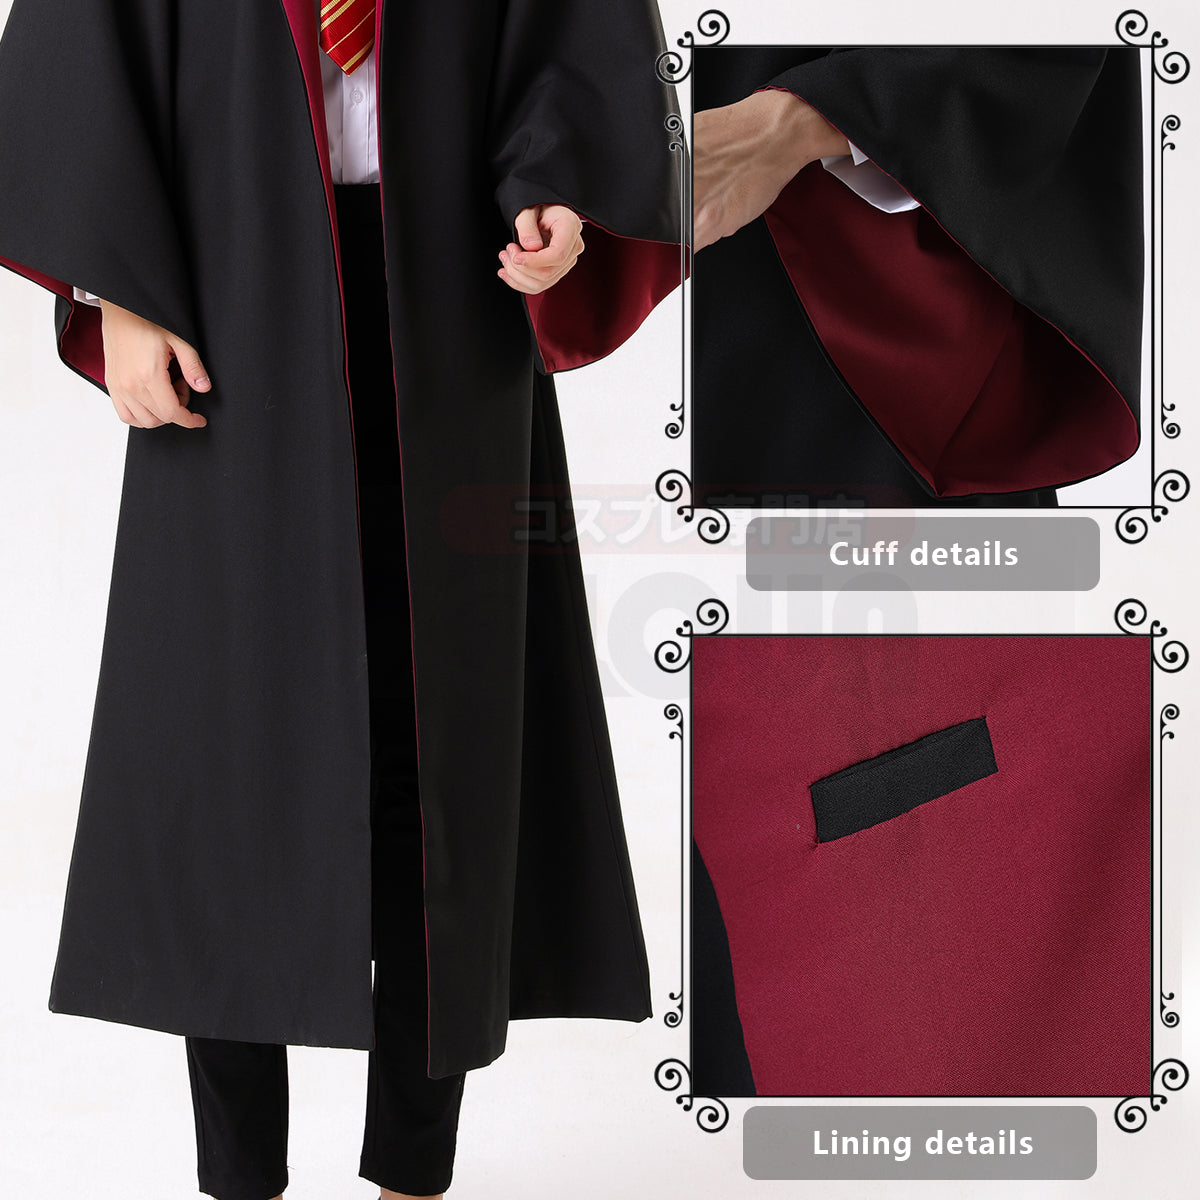 HOLOUN Harry Anime Cosplay Costume Red Robe Cloak Cape Halloween